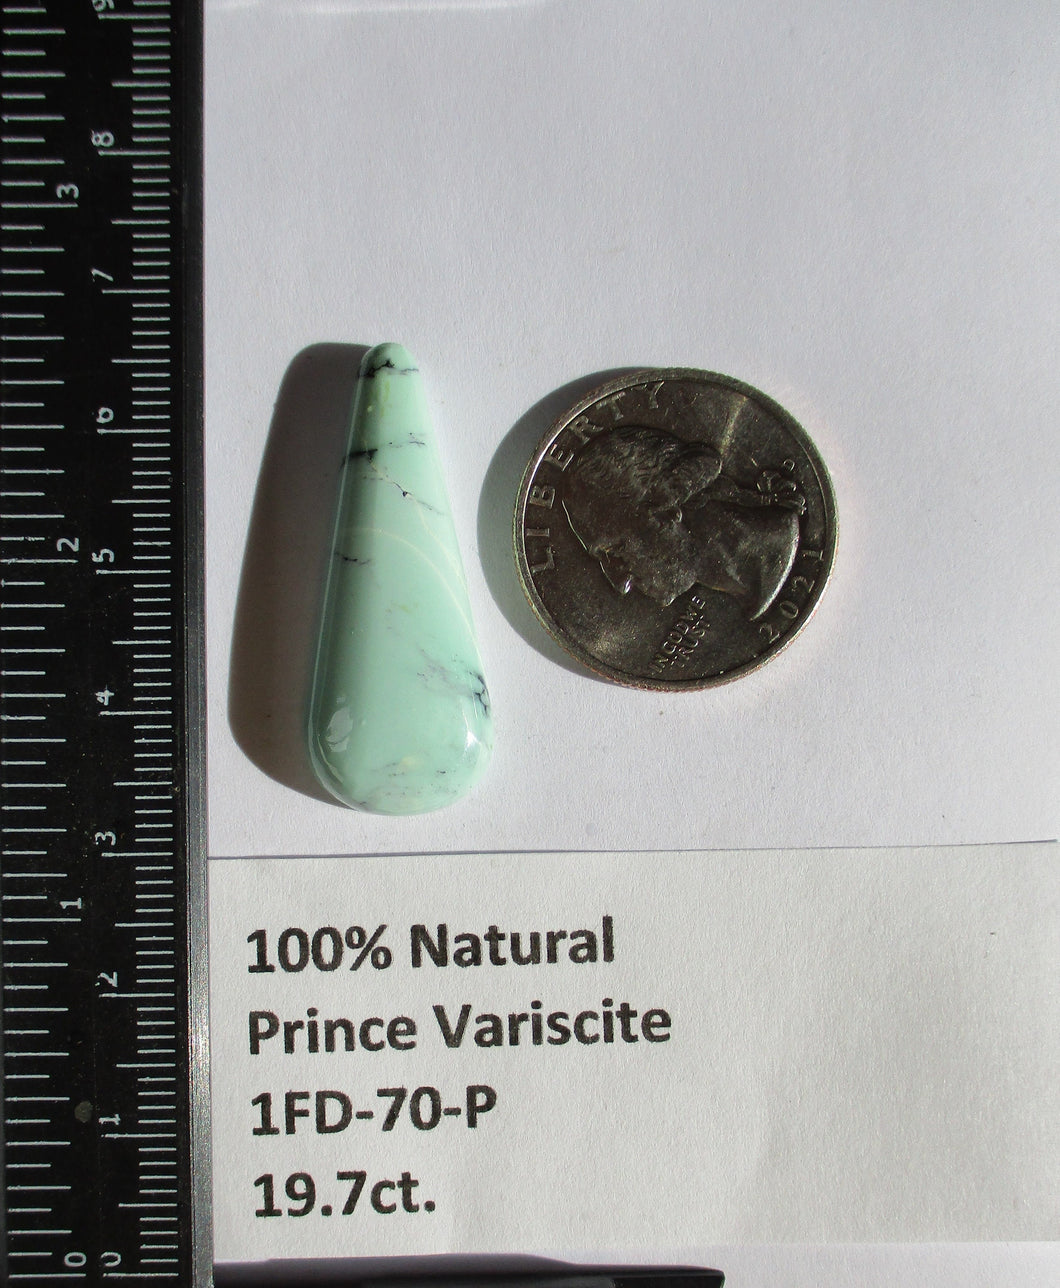 19.7 ct. (35x14x6.5 mm) Natural Prince Variscite Cabochon Gemstone, # 1FD 70